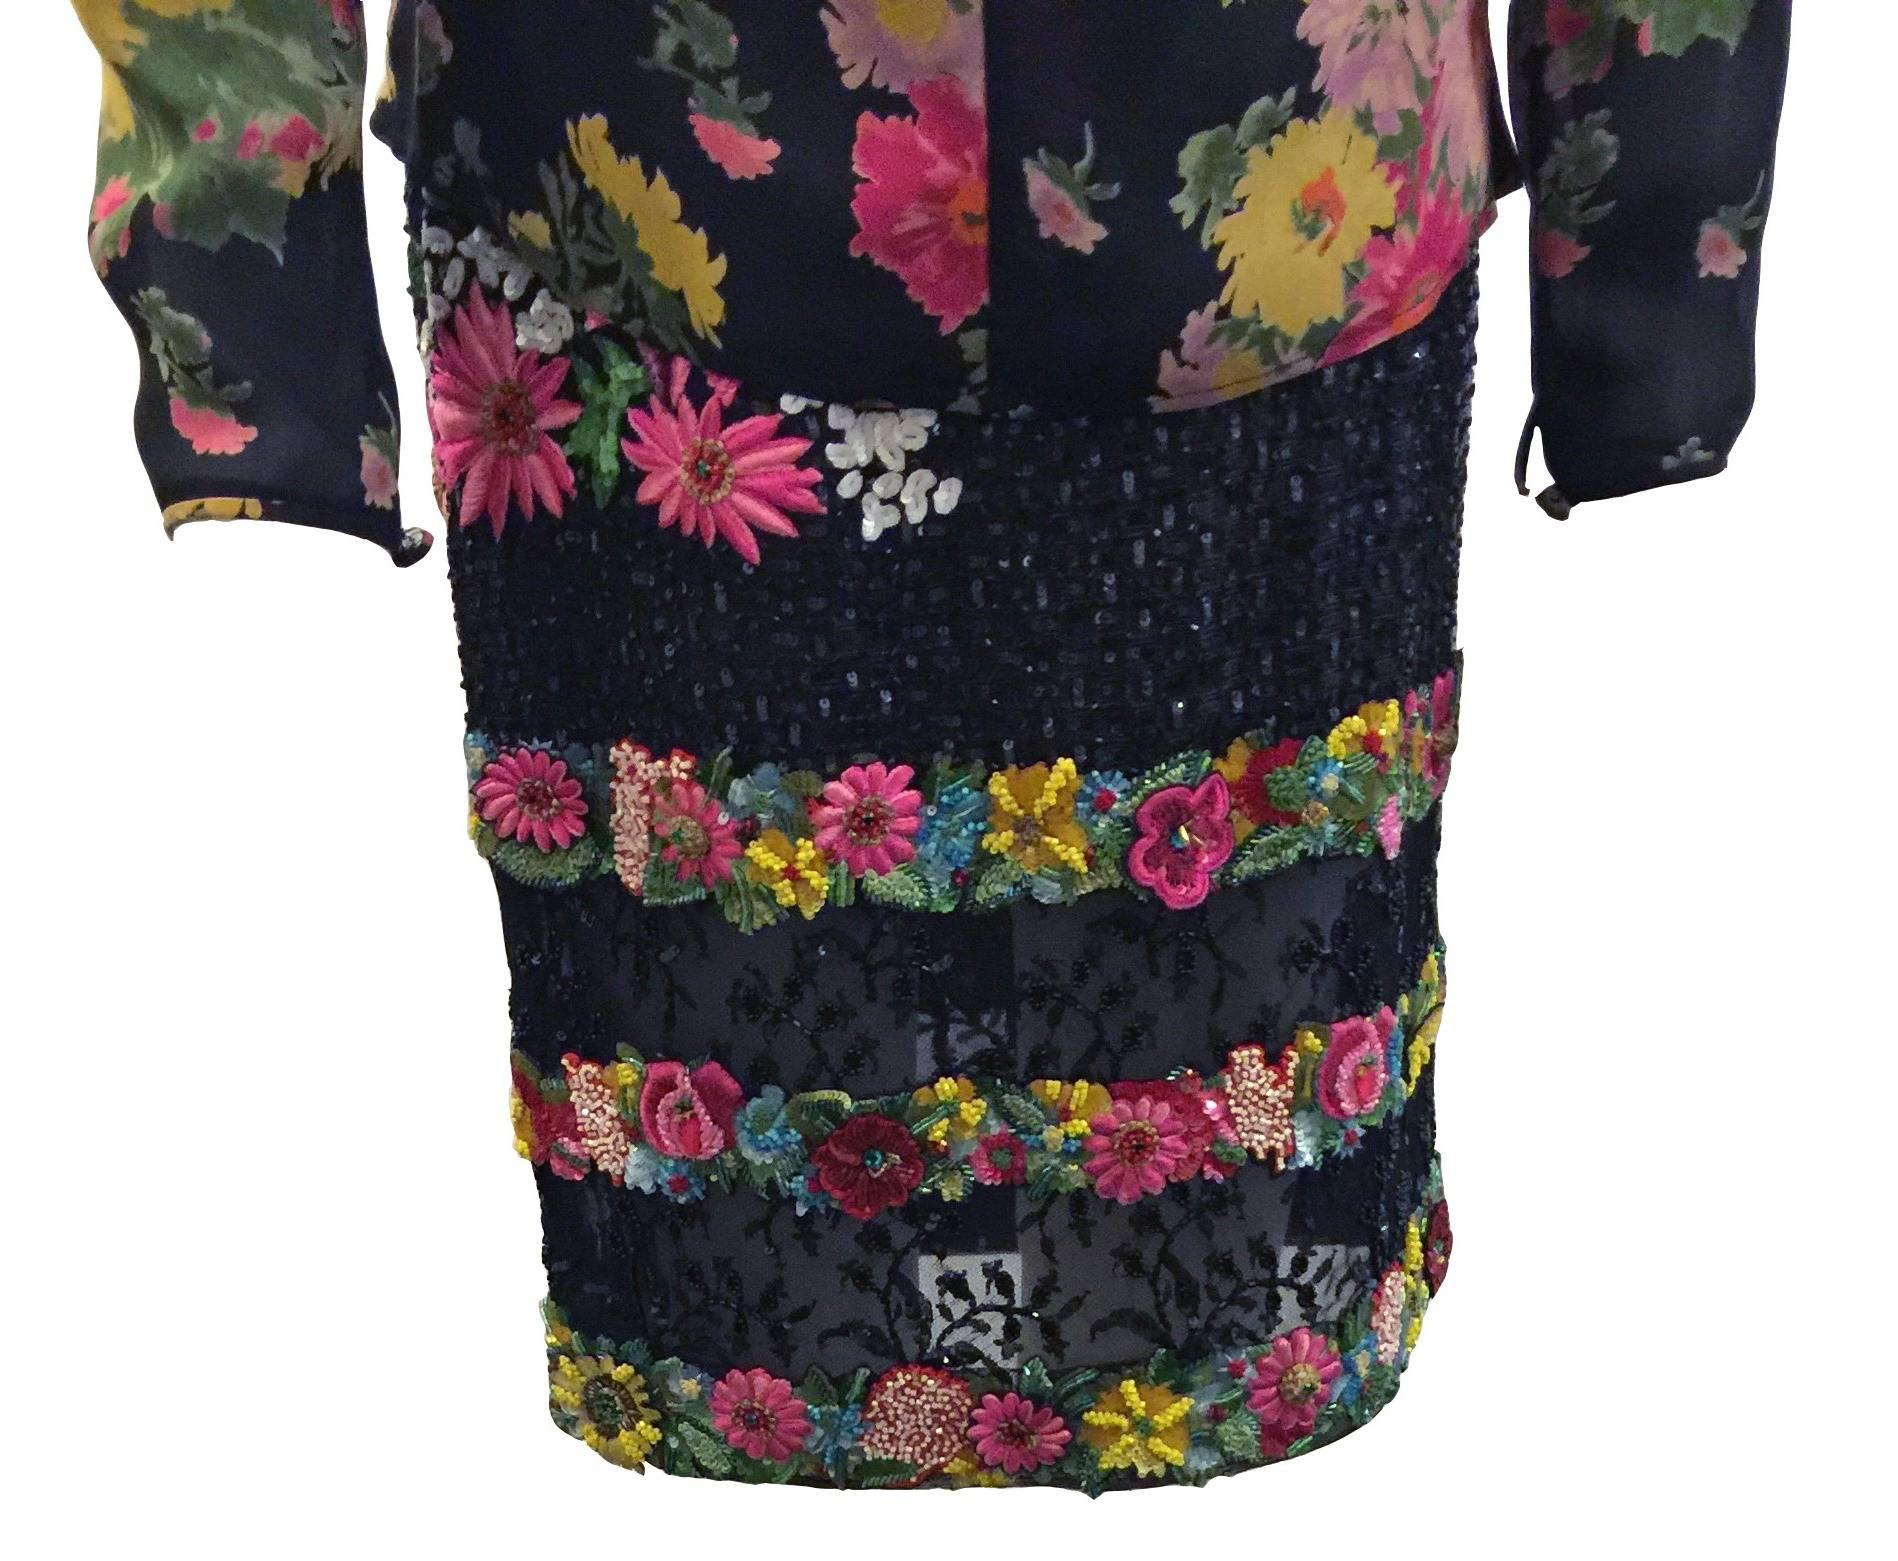 Valentino ‘Night’ Silk Chiffon Applique Embroidered Skirt as part of Three Piece 1